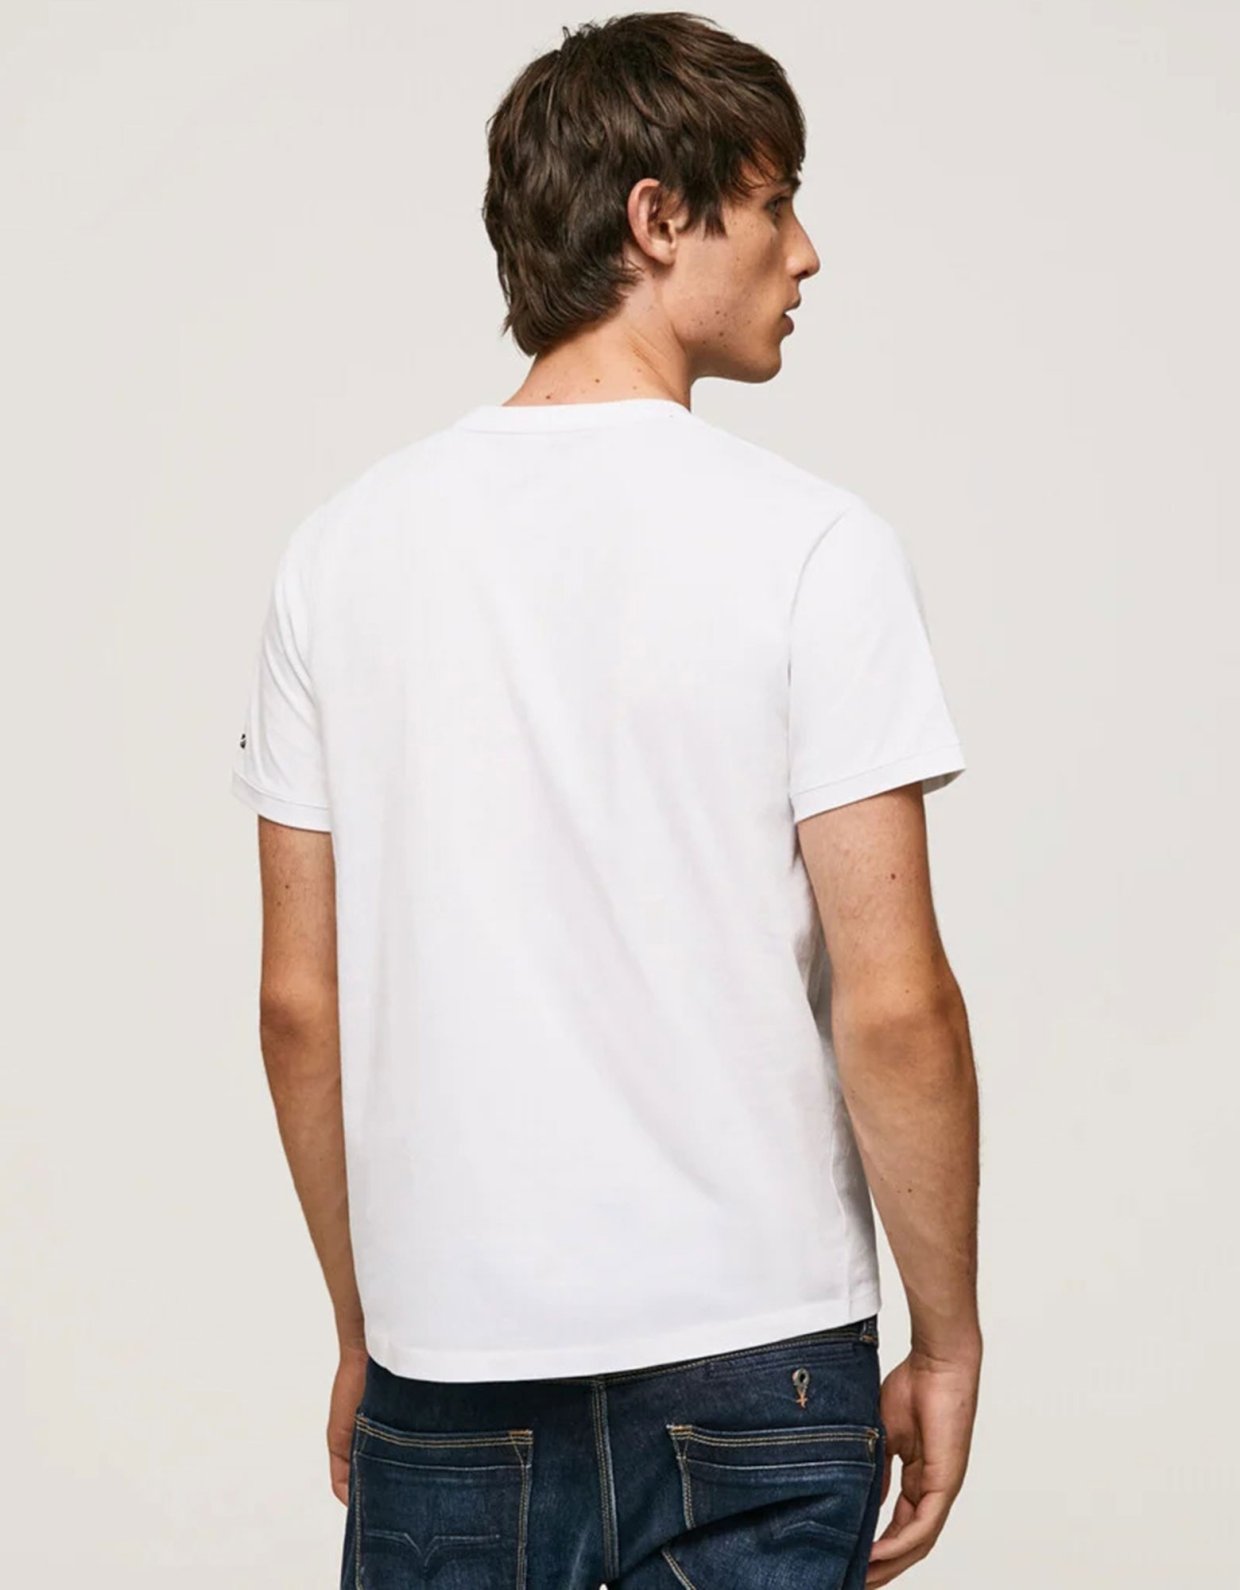 Pepe Jeans Teaghan t-shirt white